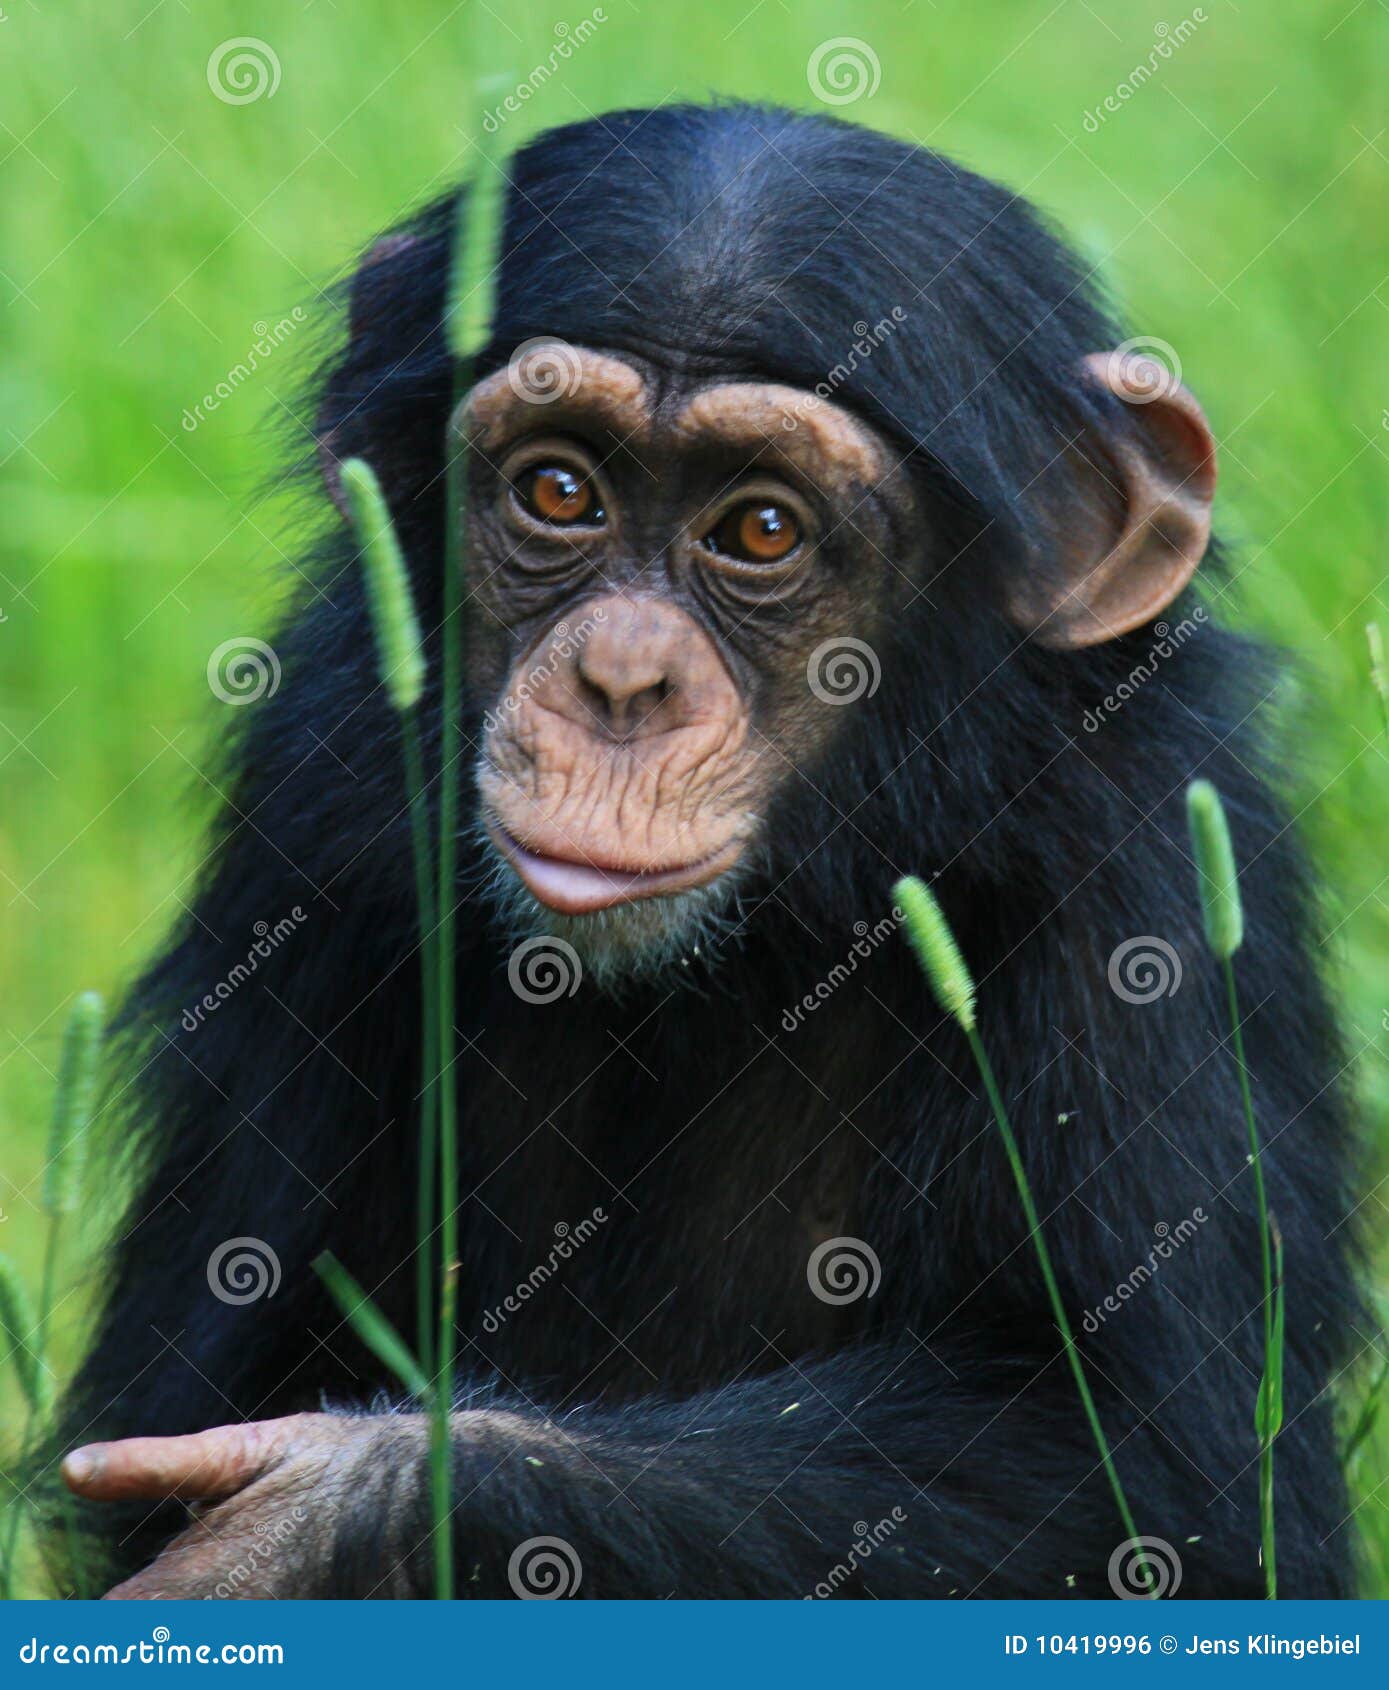 baby chimp